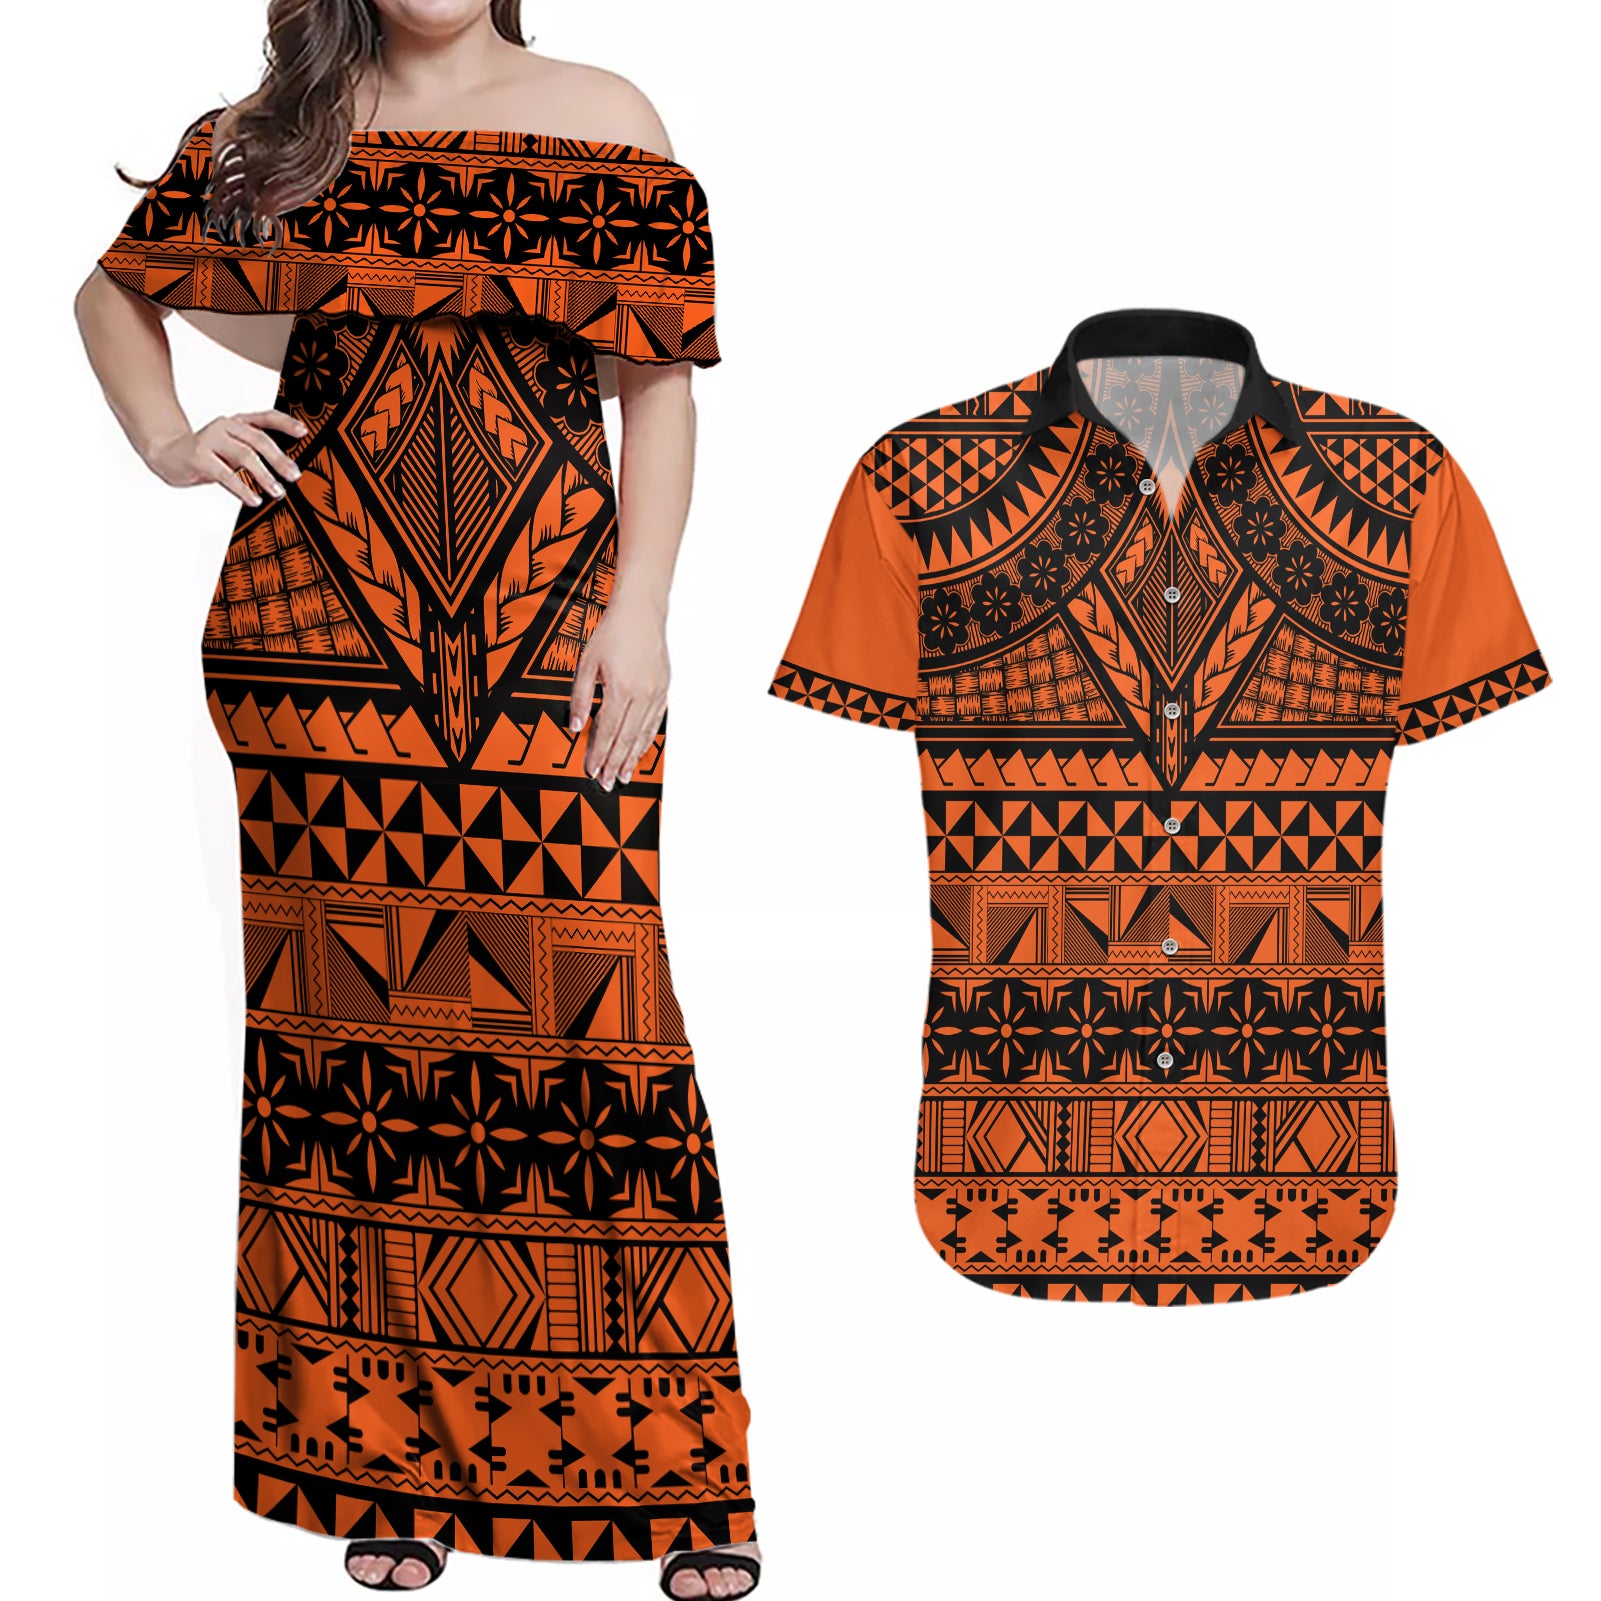 Halo Olaketa Solomon Islands Couples Matching Off Shoulder Maxi Dress and Hawaiian Shirt Melanesian Tribal Pattern Orange Version LT14 Orange - Polynesian Pride